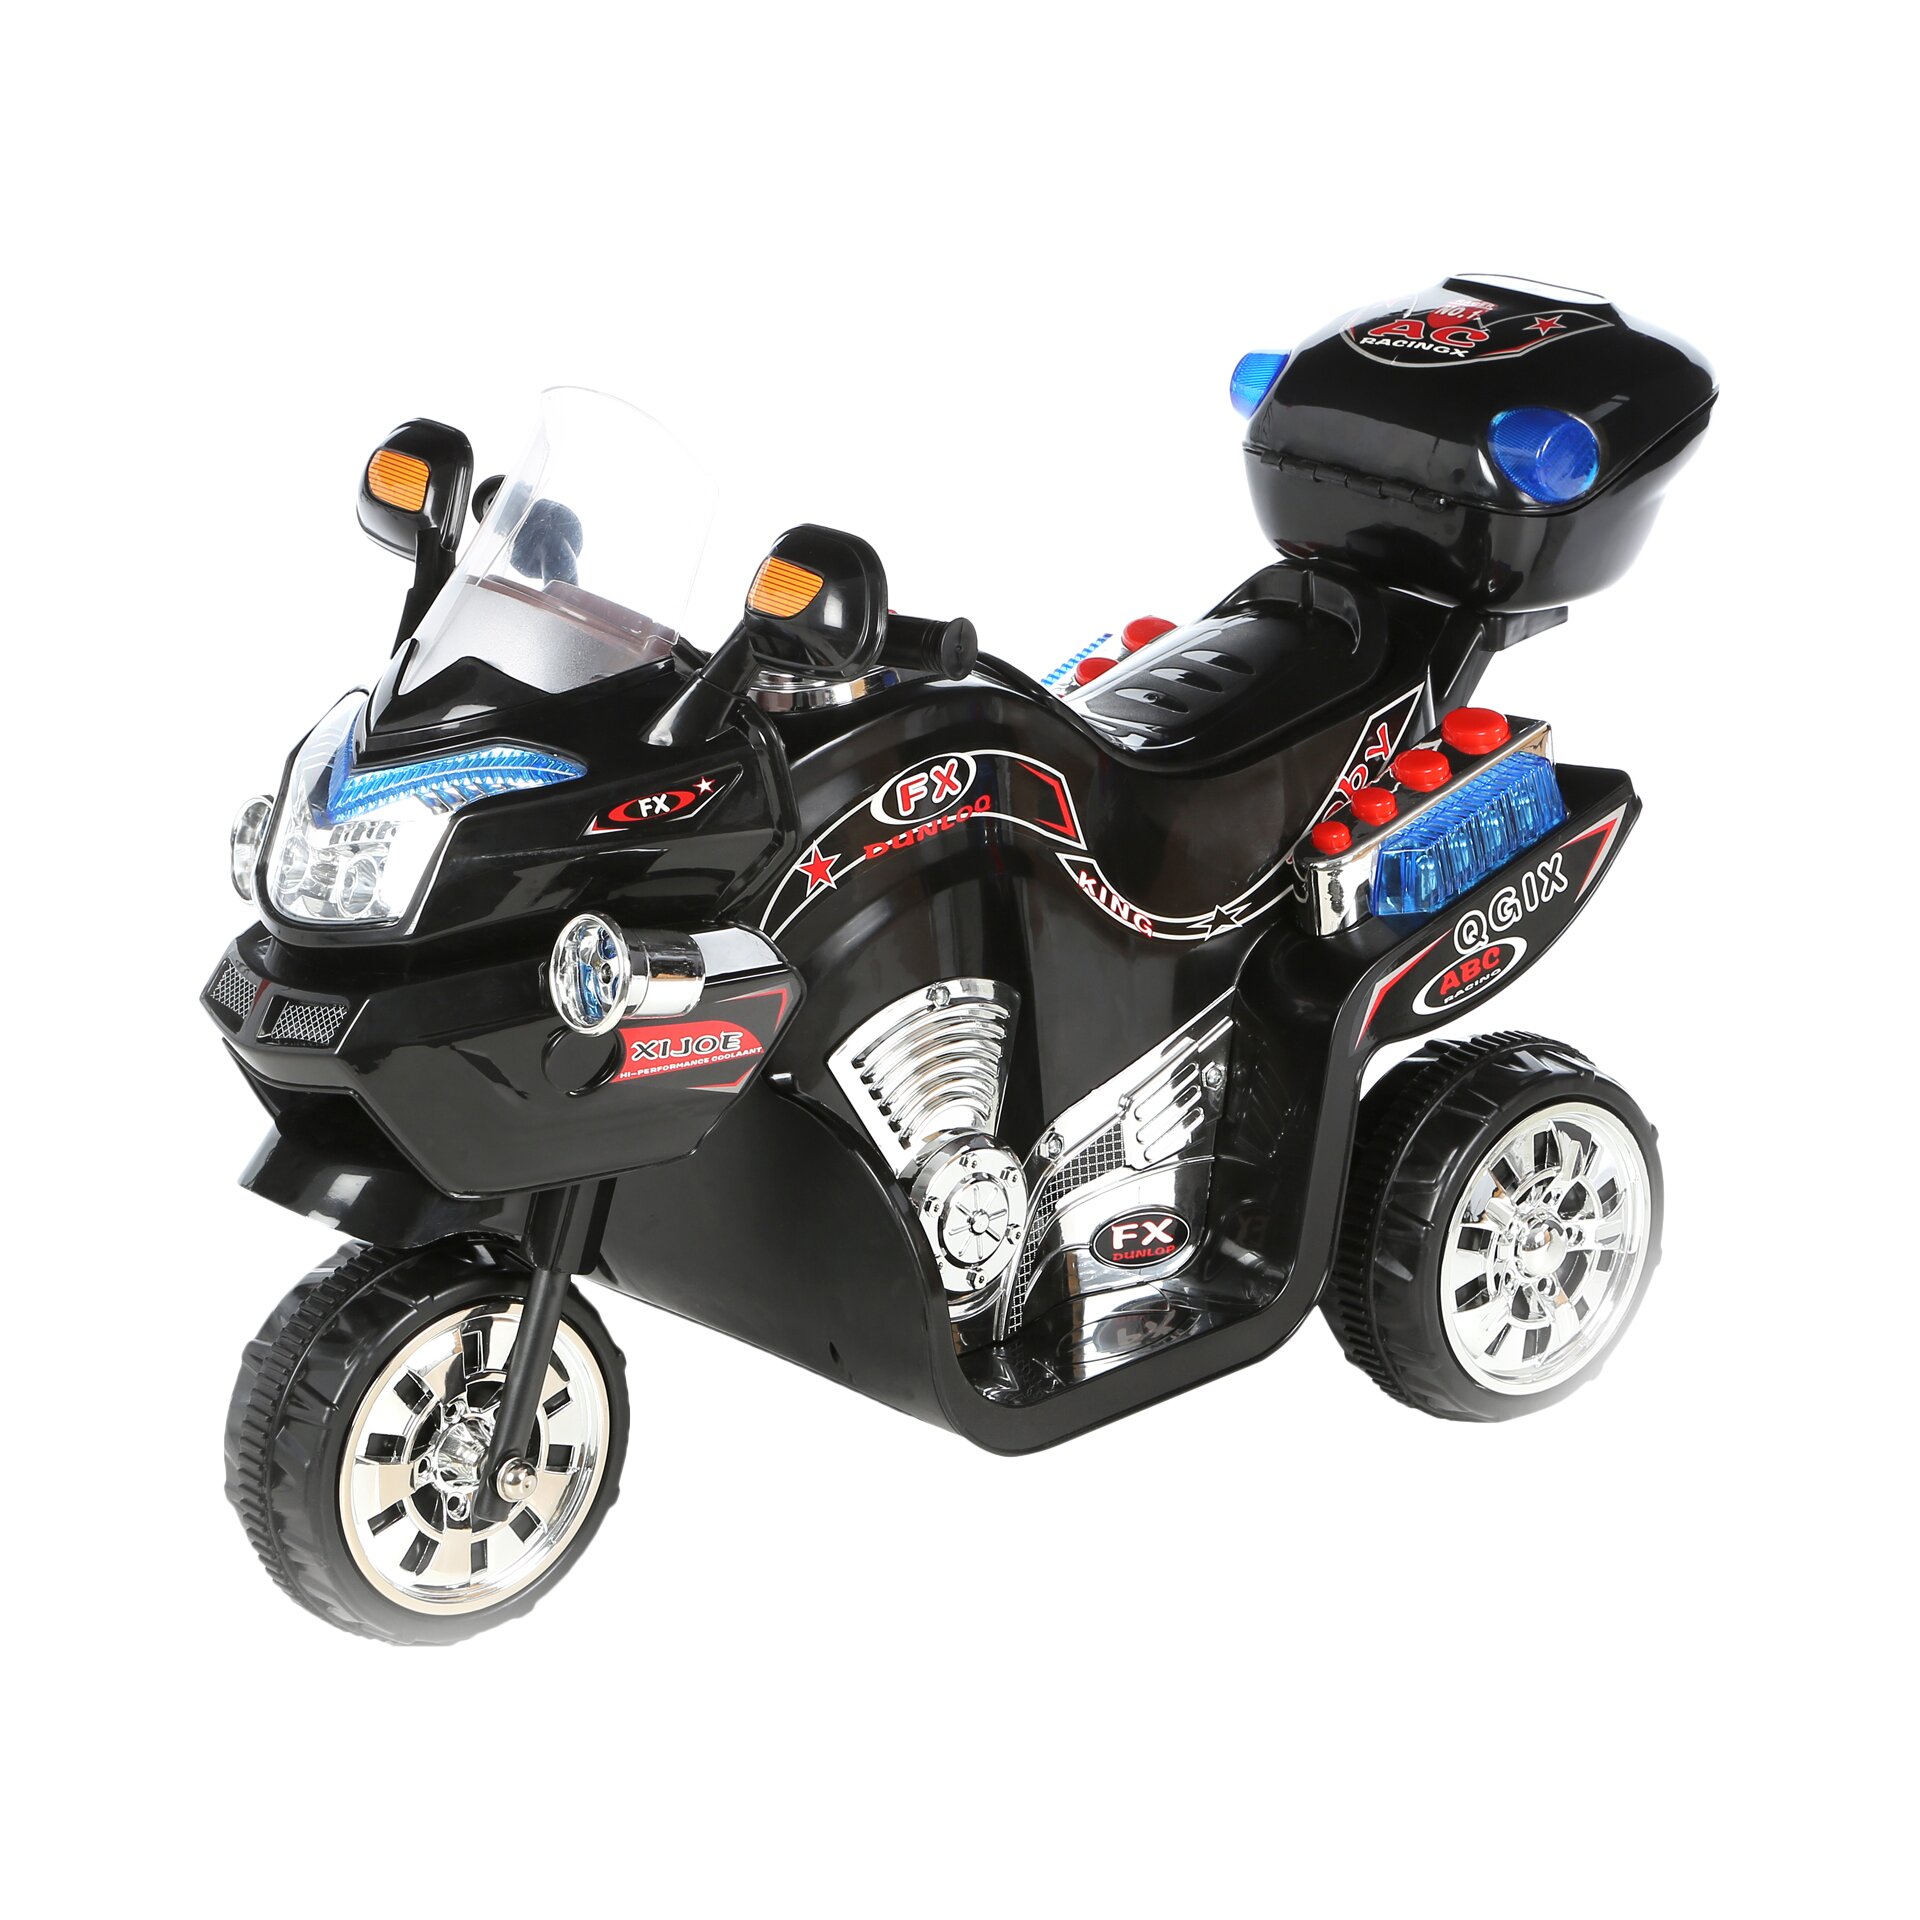 FX Wheel 6V Battery Powered Motorcycle | Wayfair